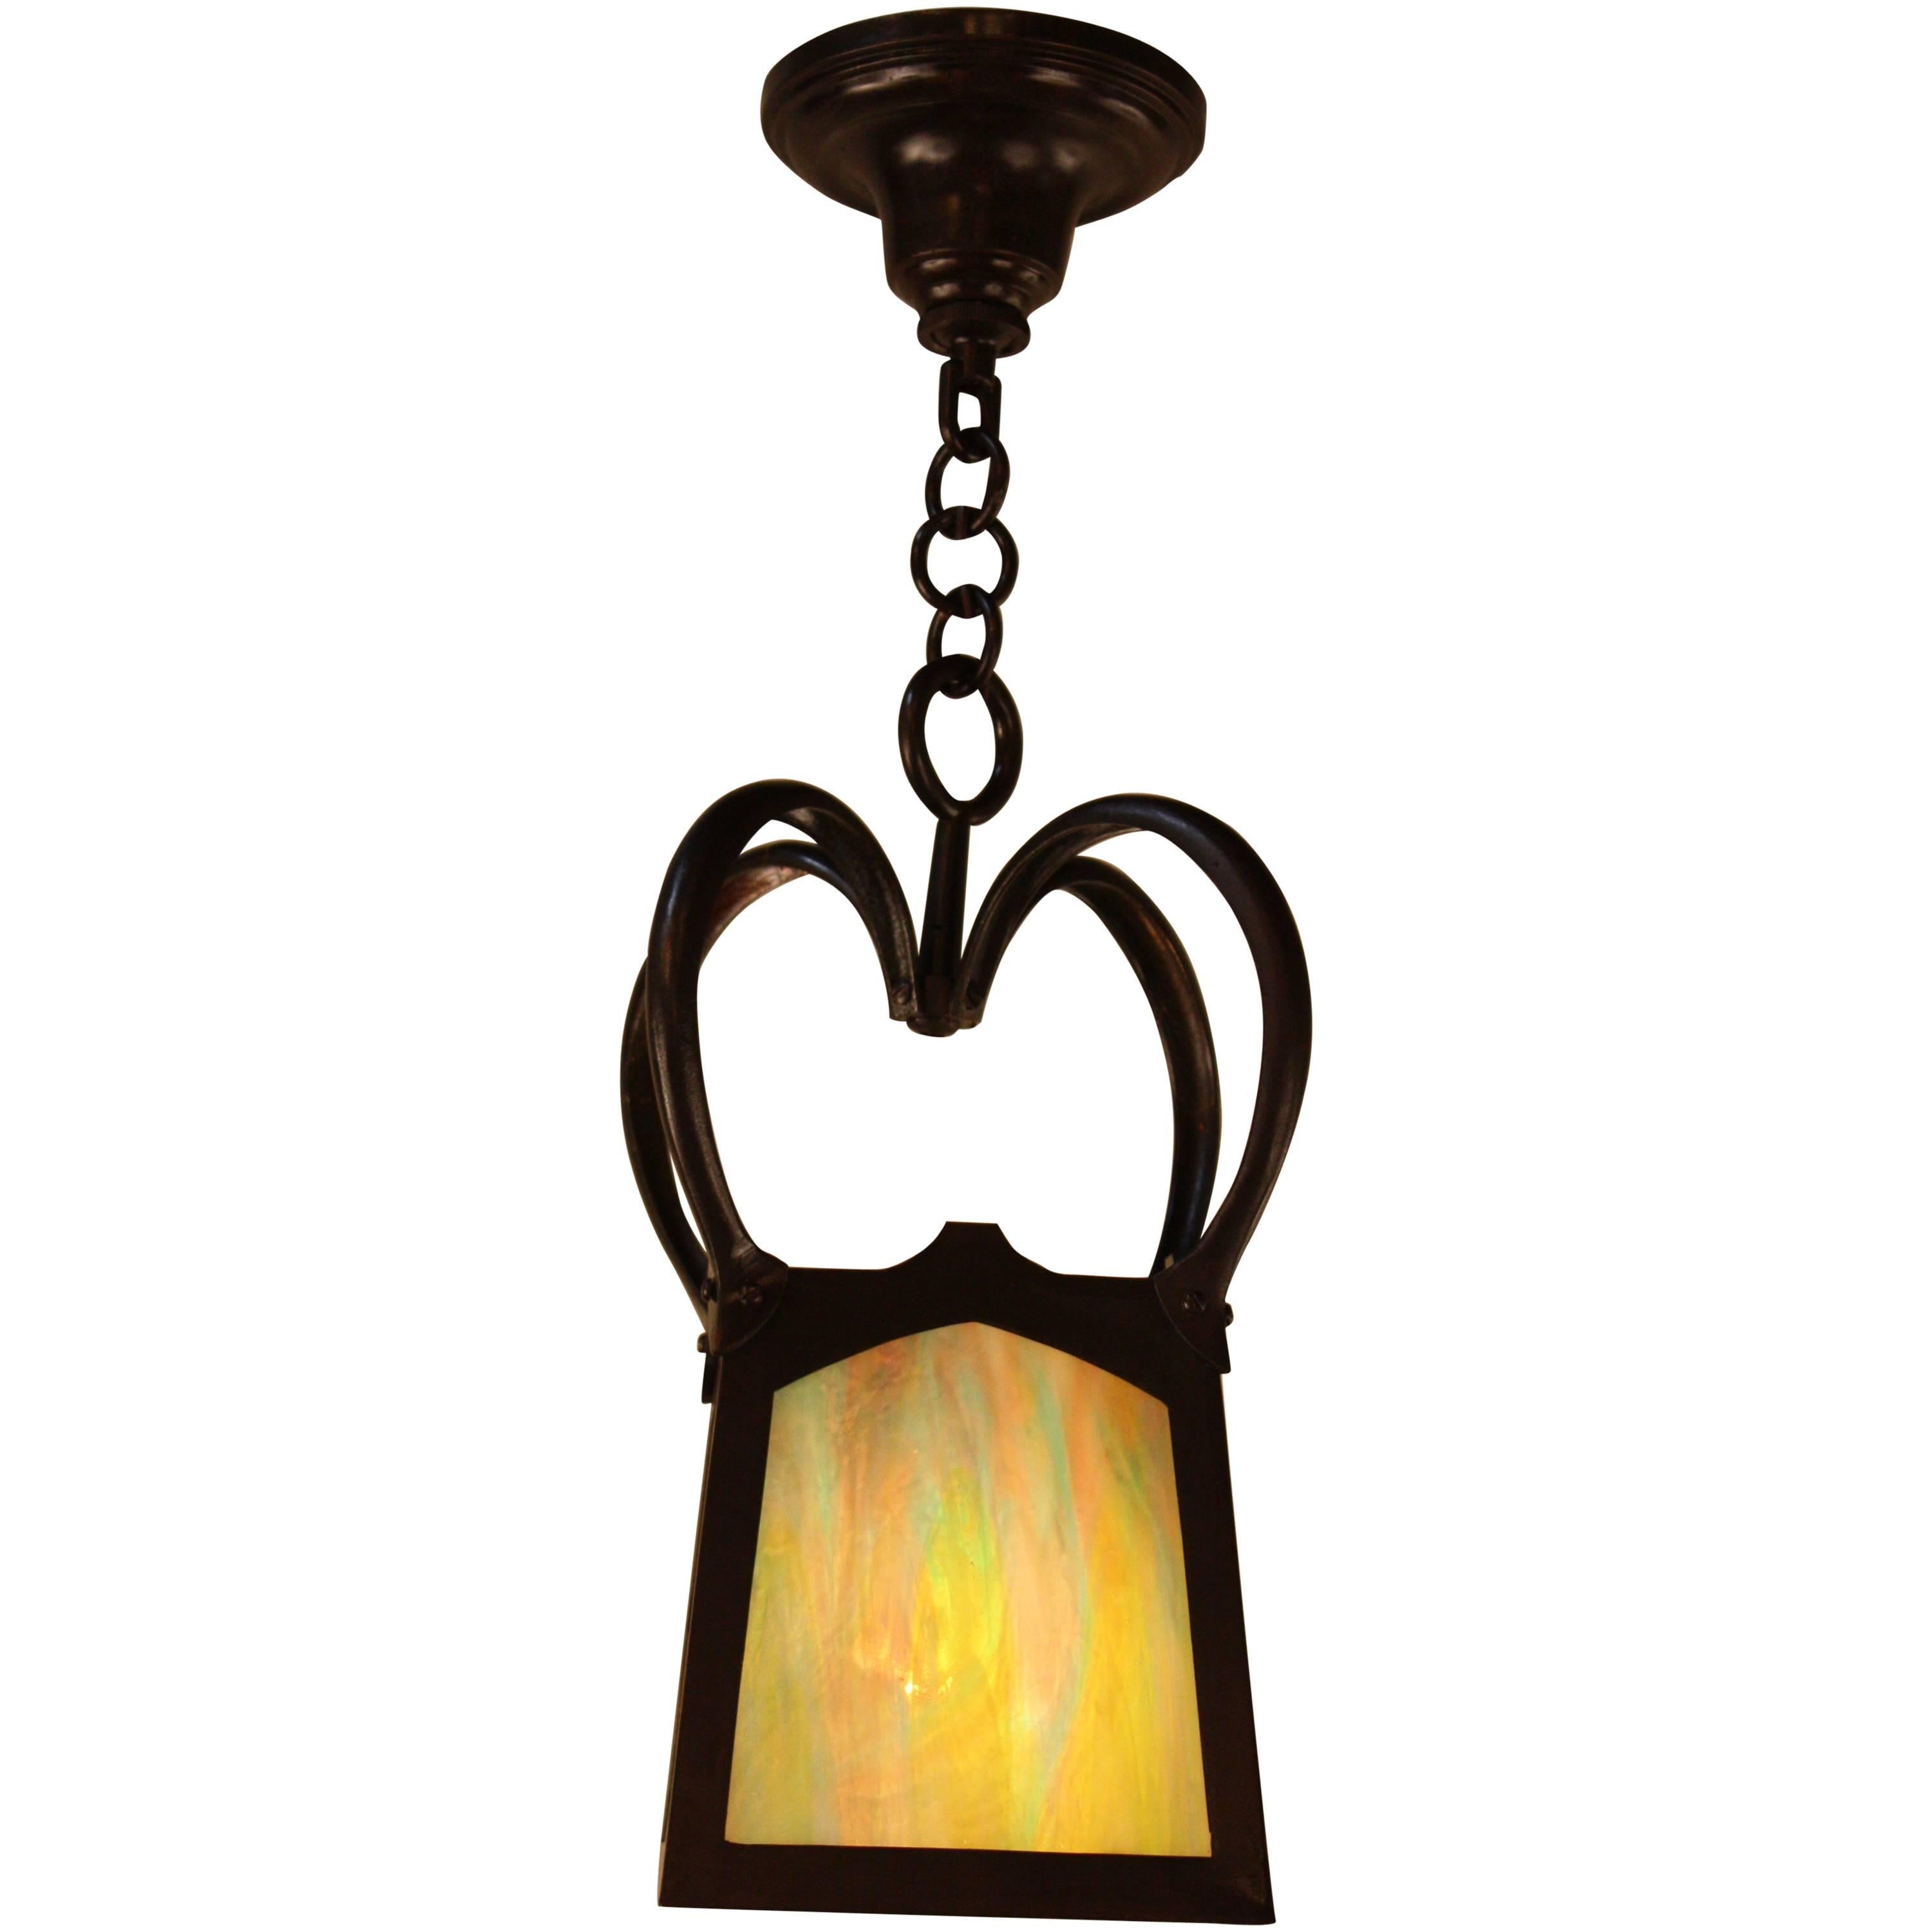 English Arts & Crafts / Art Nouveau Bronze Lantern